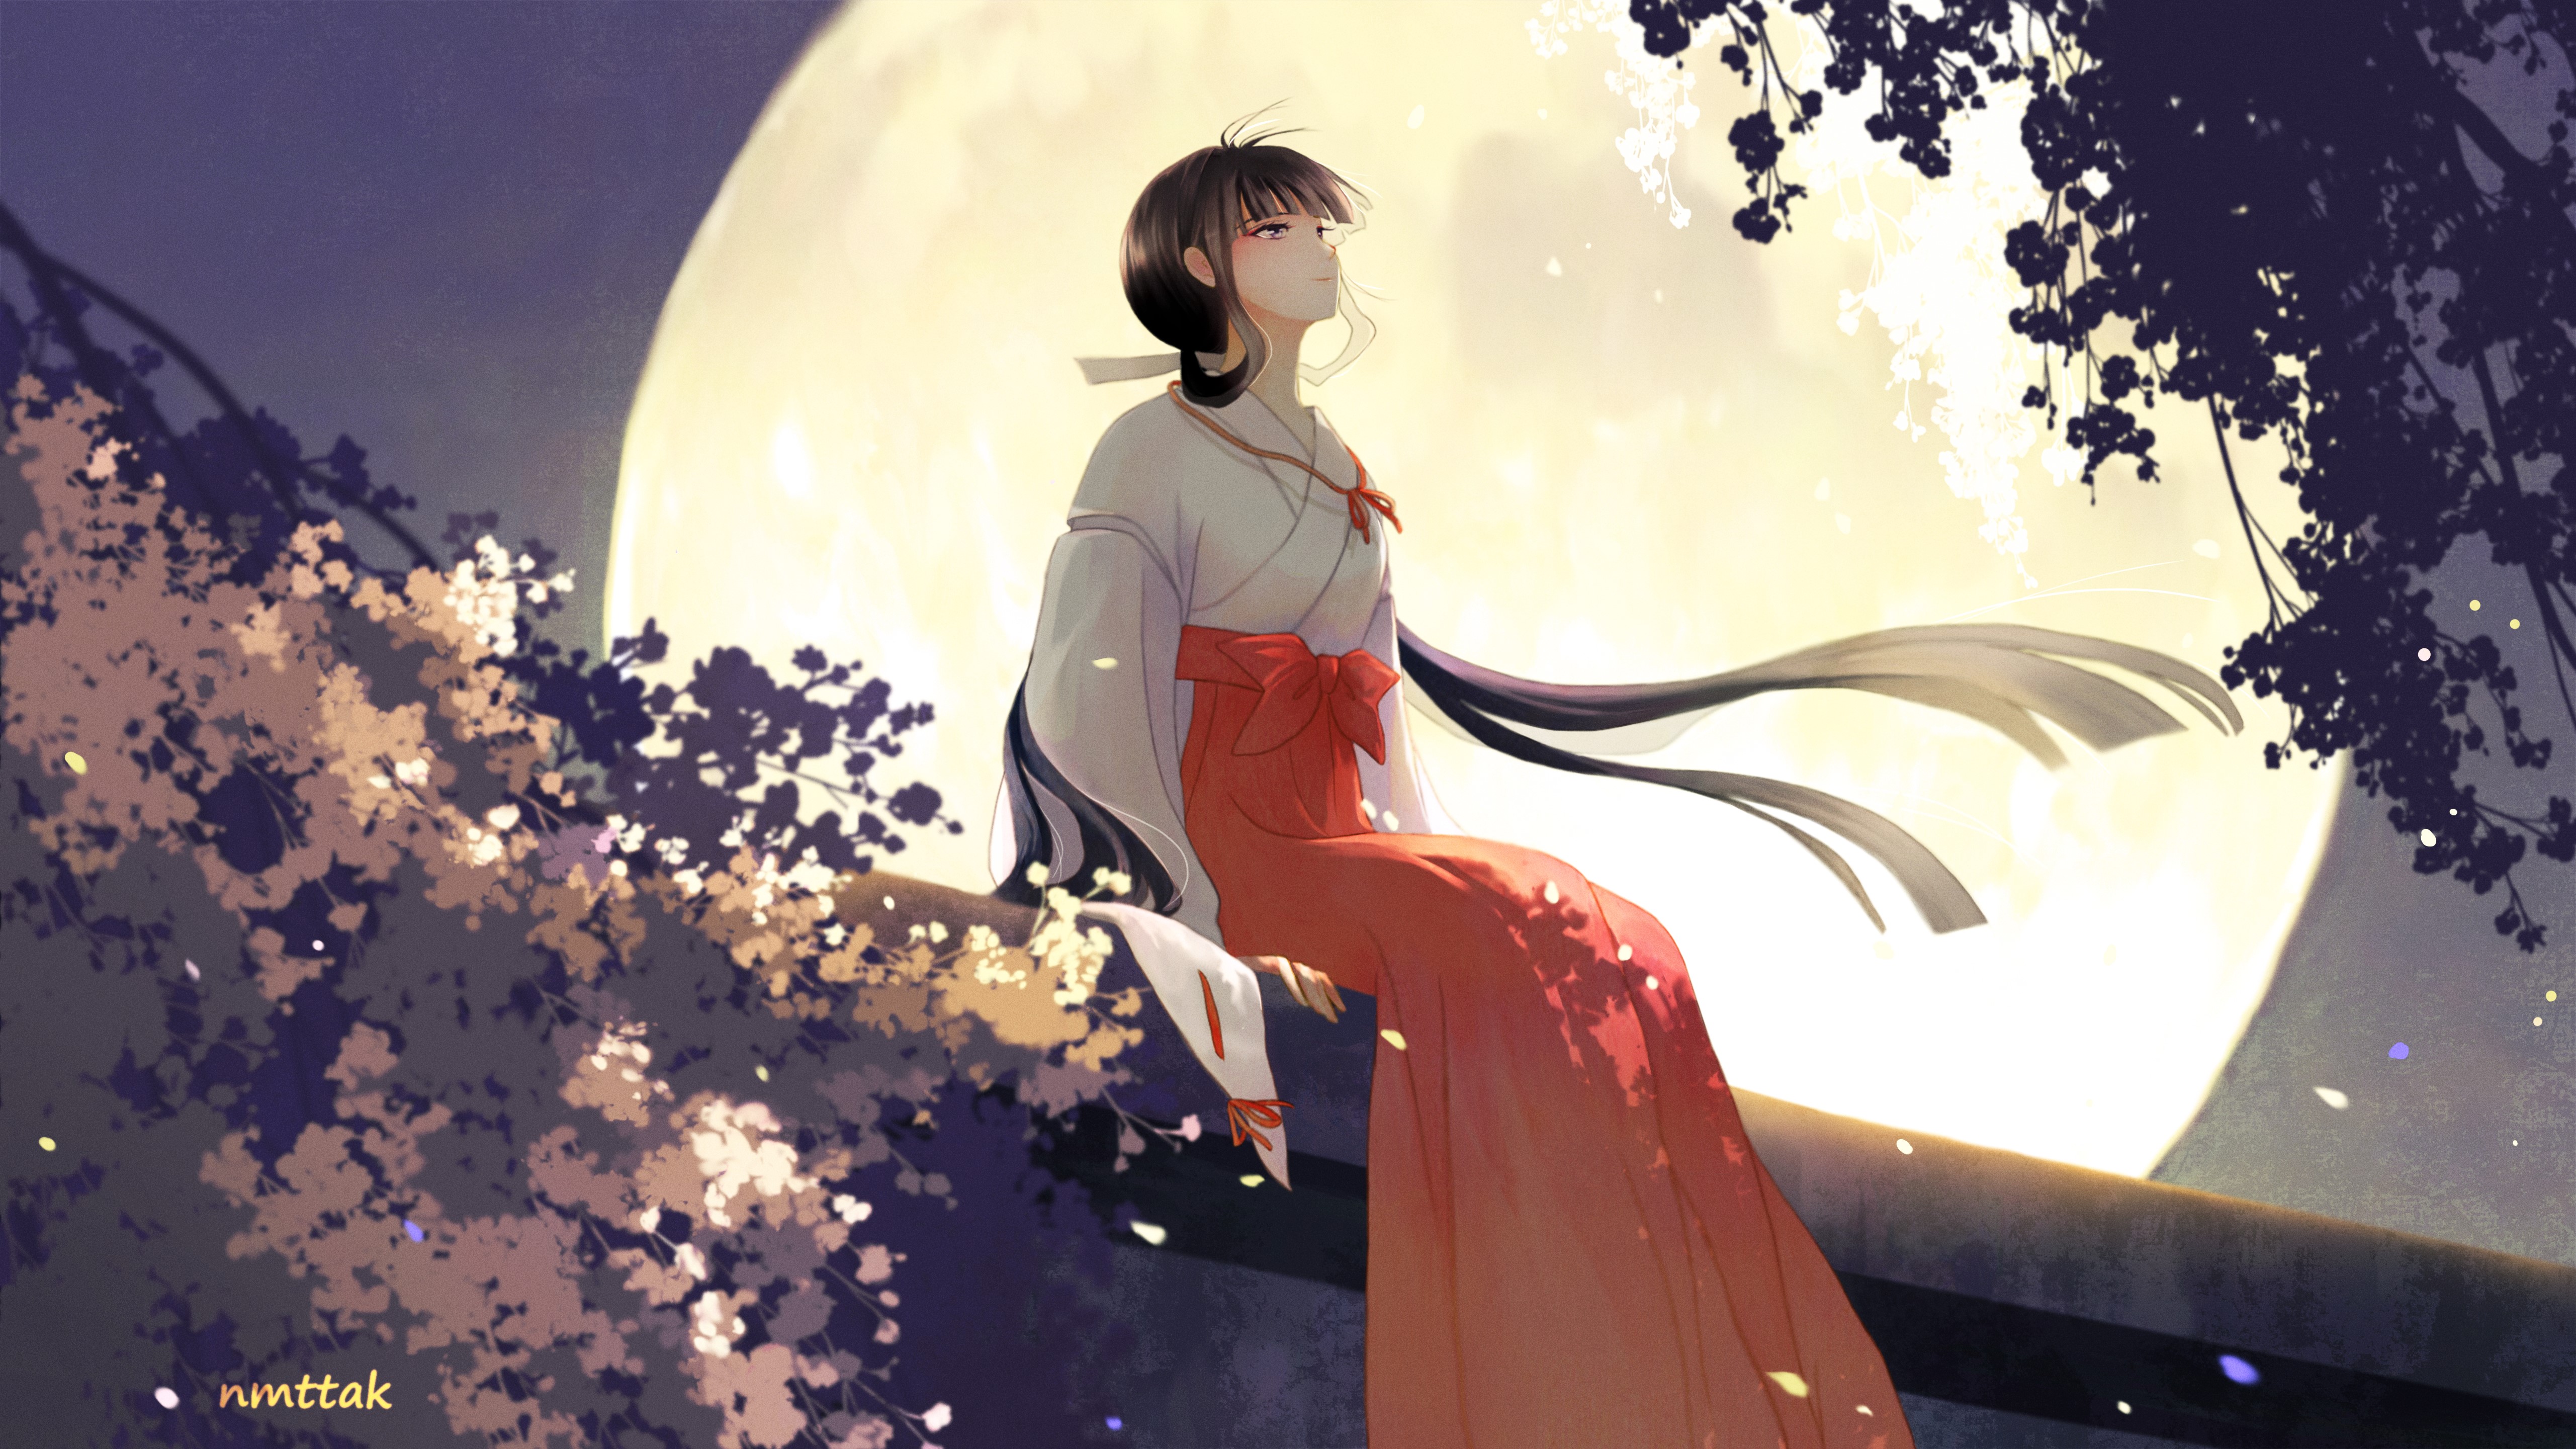 Anime 5123x2881 anime anime girls Inuyasha Kikyou Inuyasha sitting Moon night moonlight long hair hair blowing in the wind wind looking up